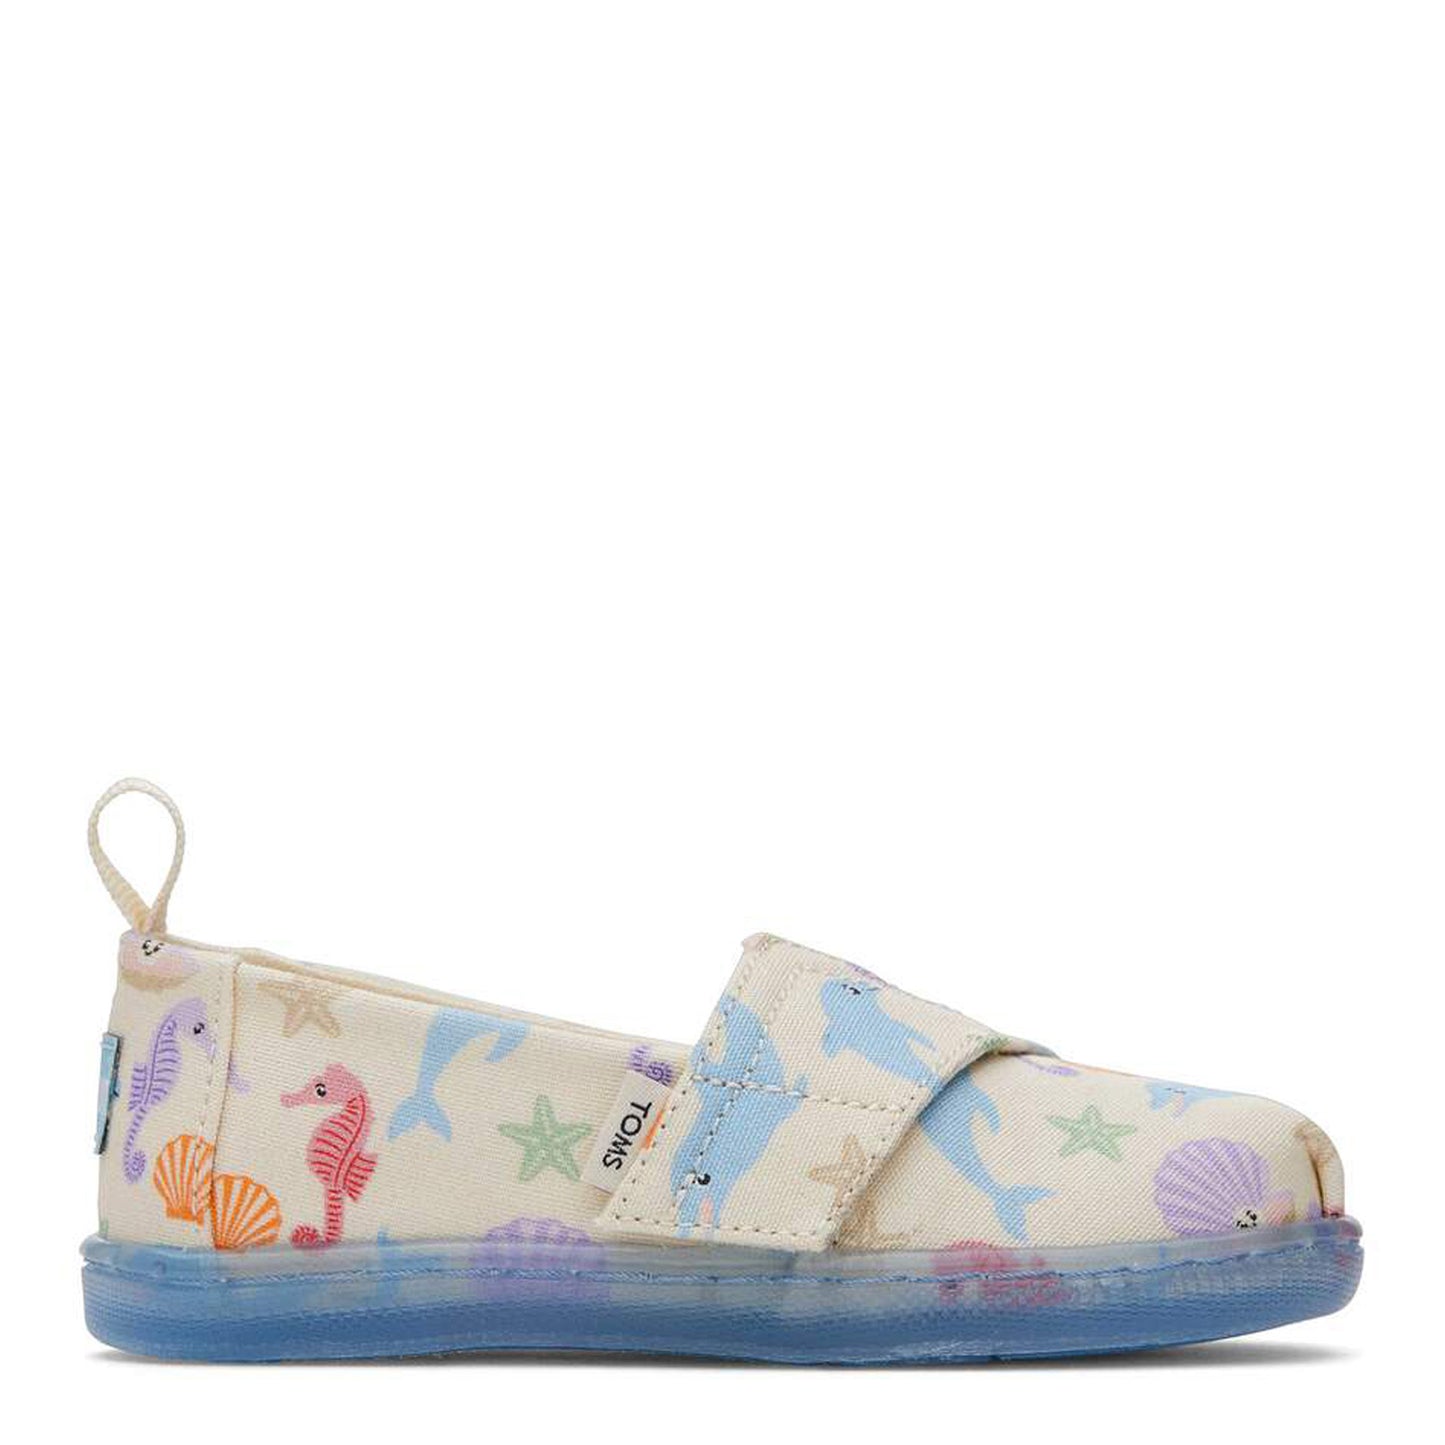 Peltz Shoes  Girl's Toms Alpargata Tiny Slip-On - Toddler Beige Blue Sealife 10020632